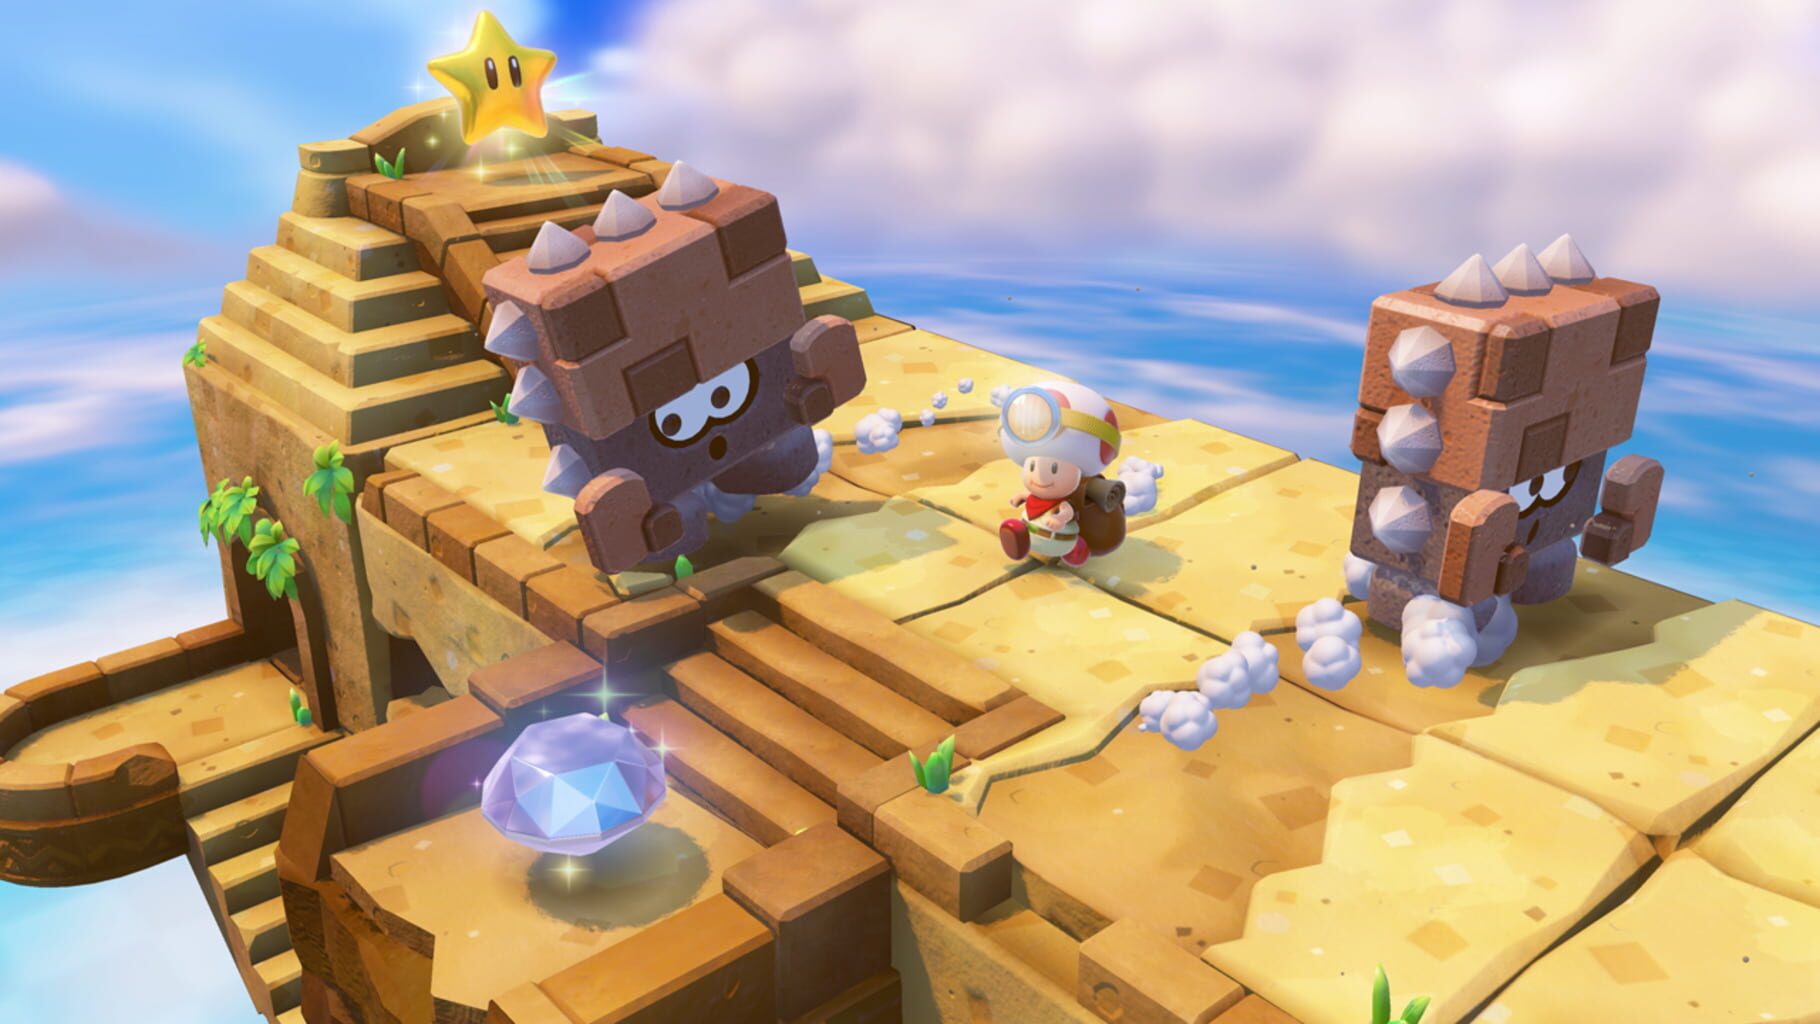 Screenshot for Captain Toad: Treasure Tracker